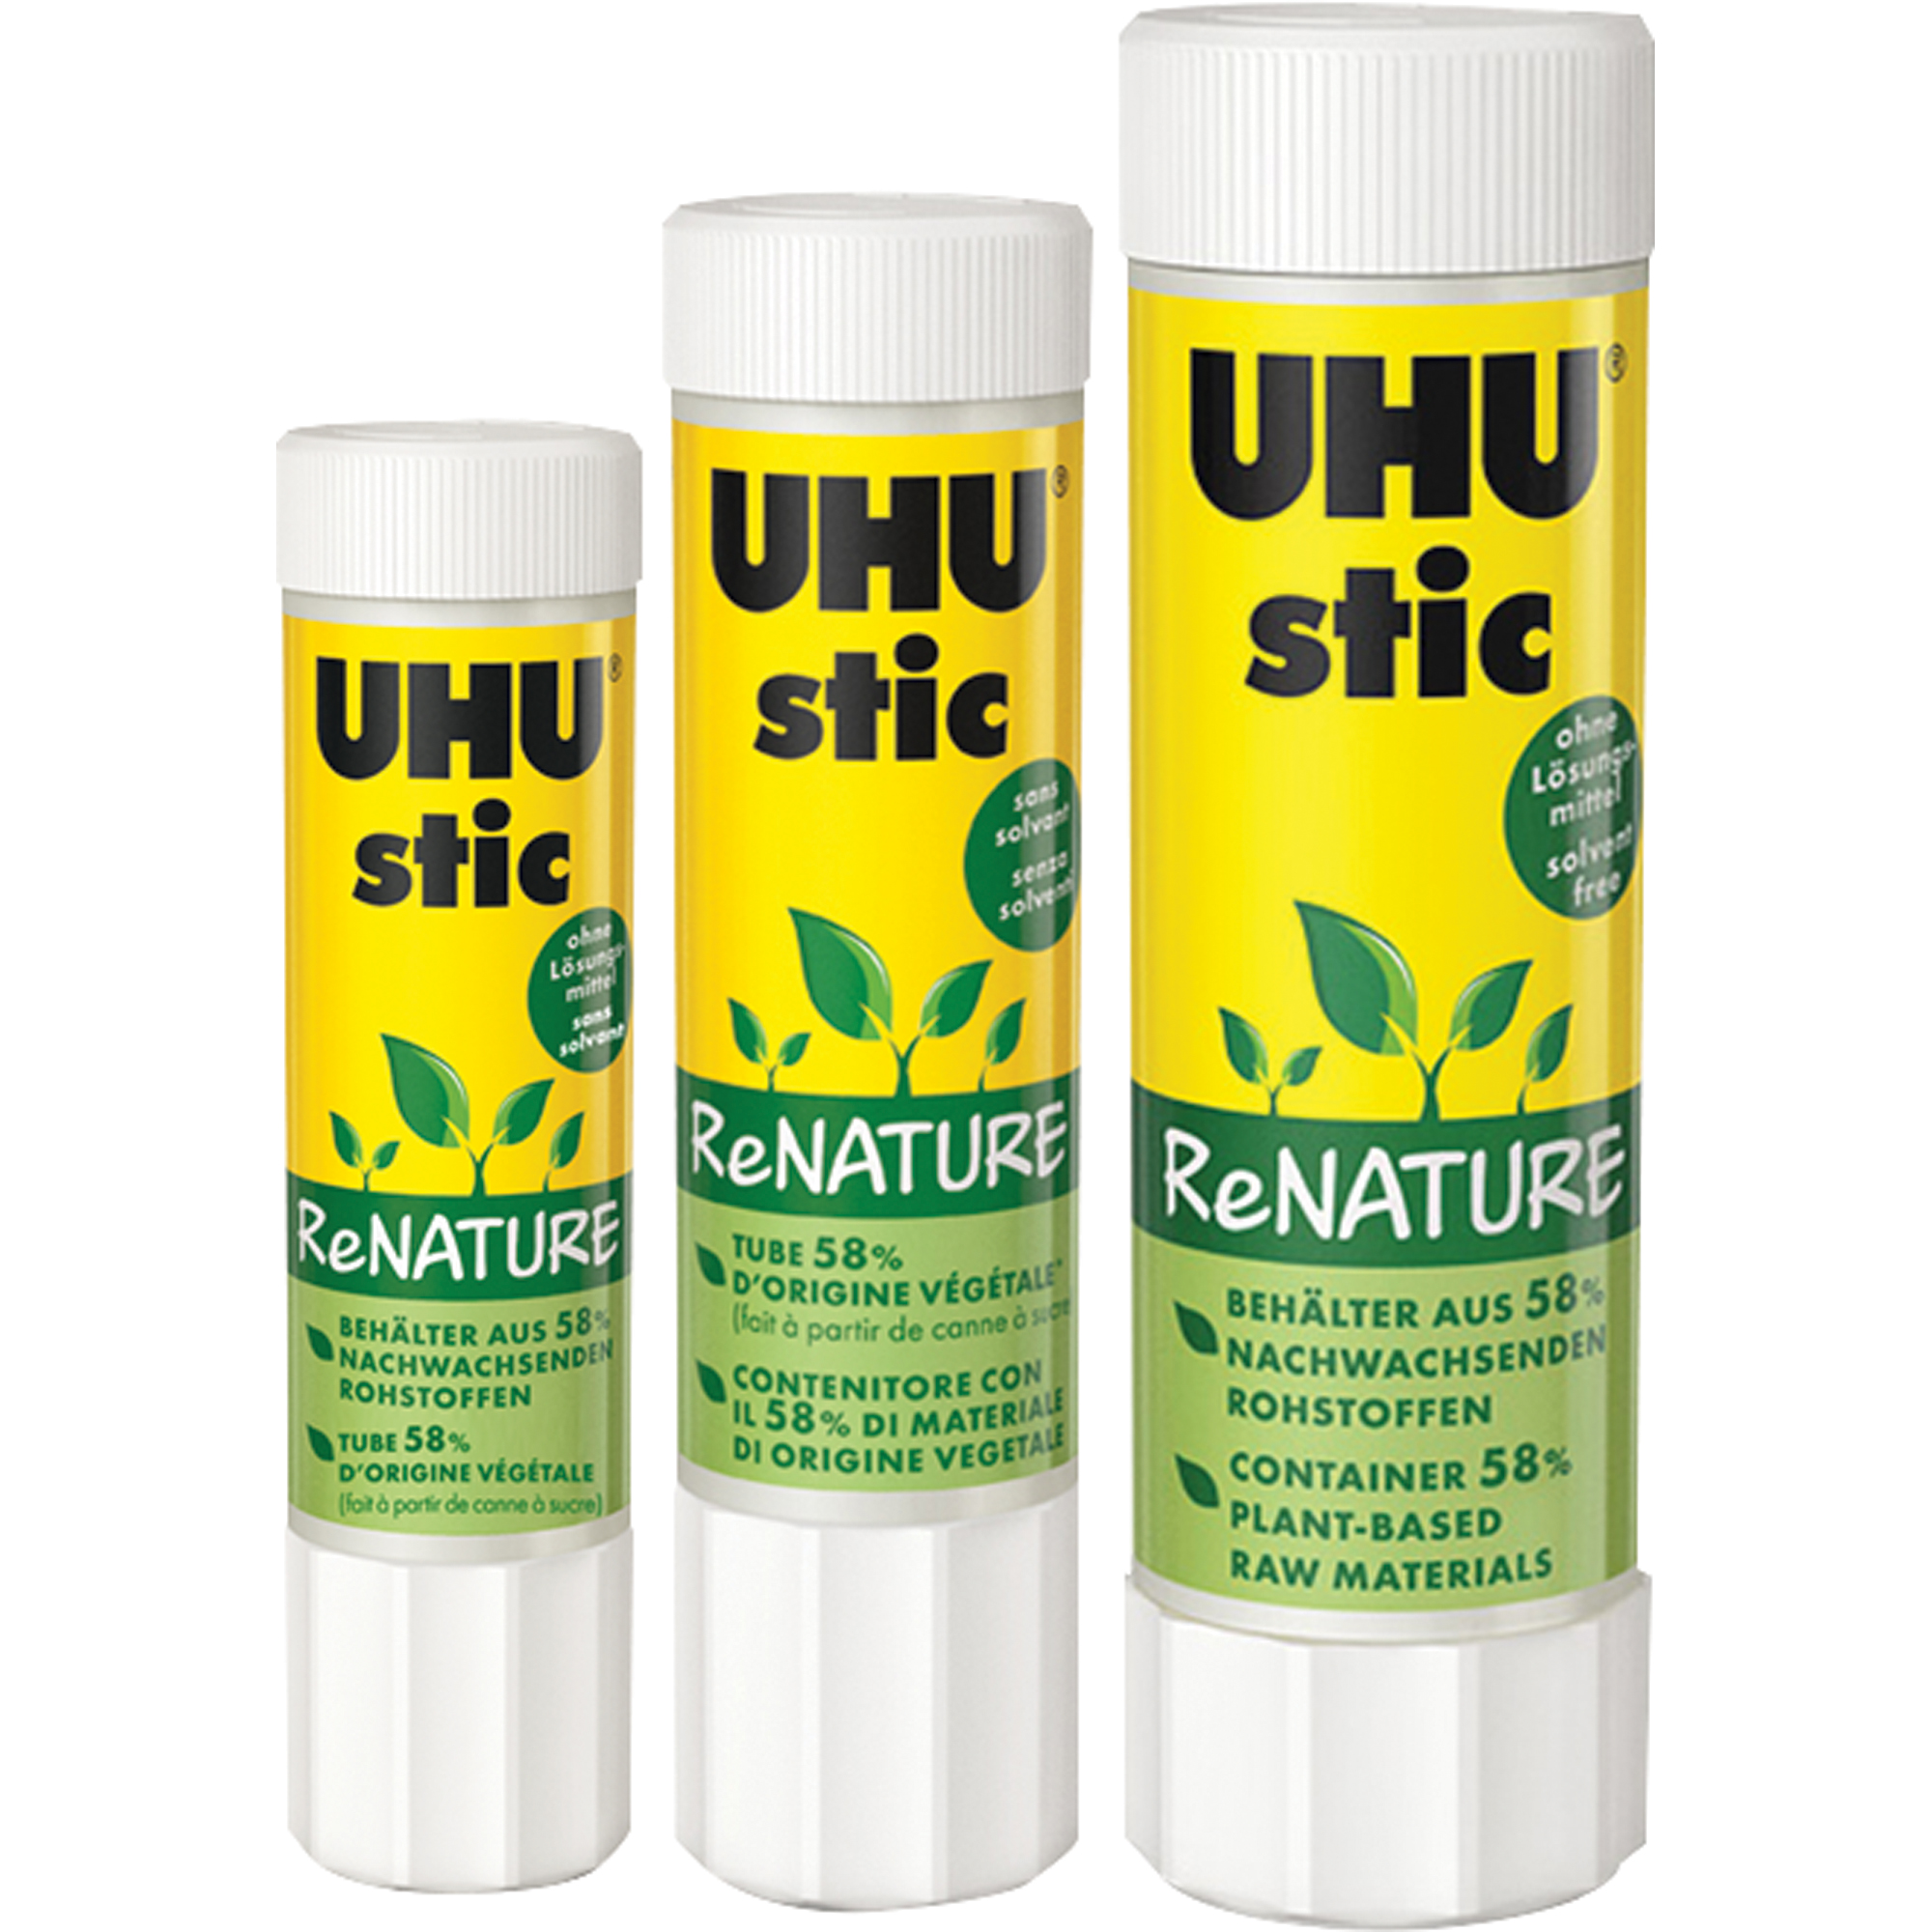 UHU® Klebestift stic ReNATURE 21 g